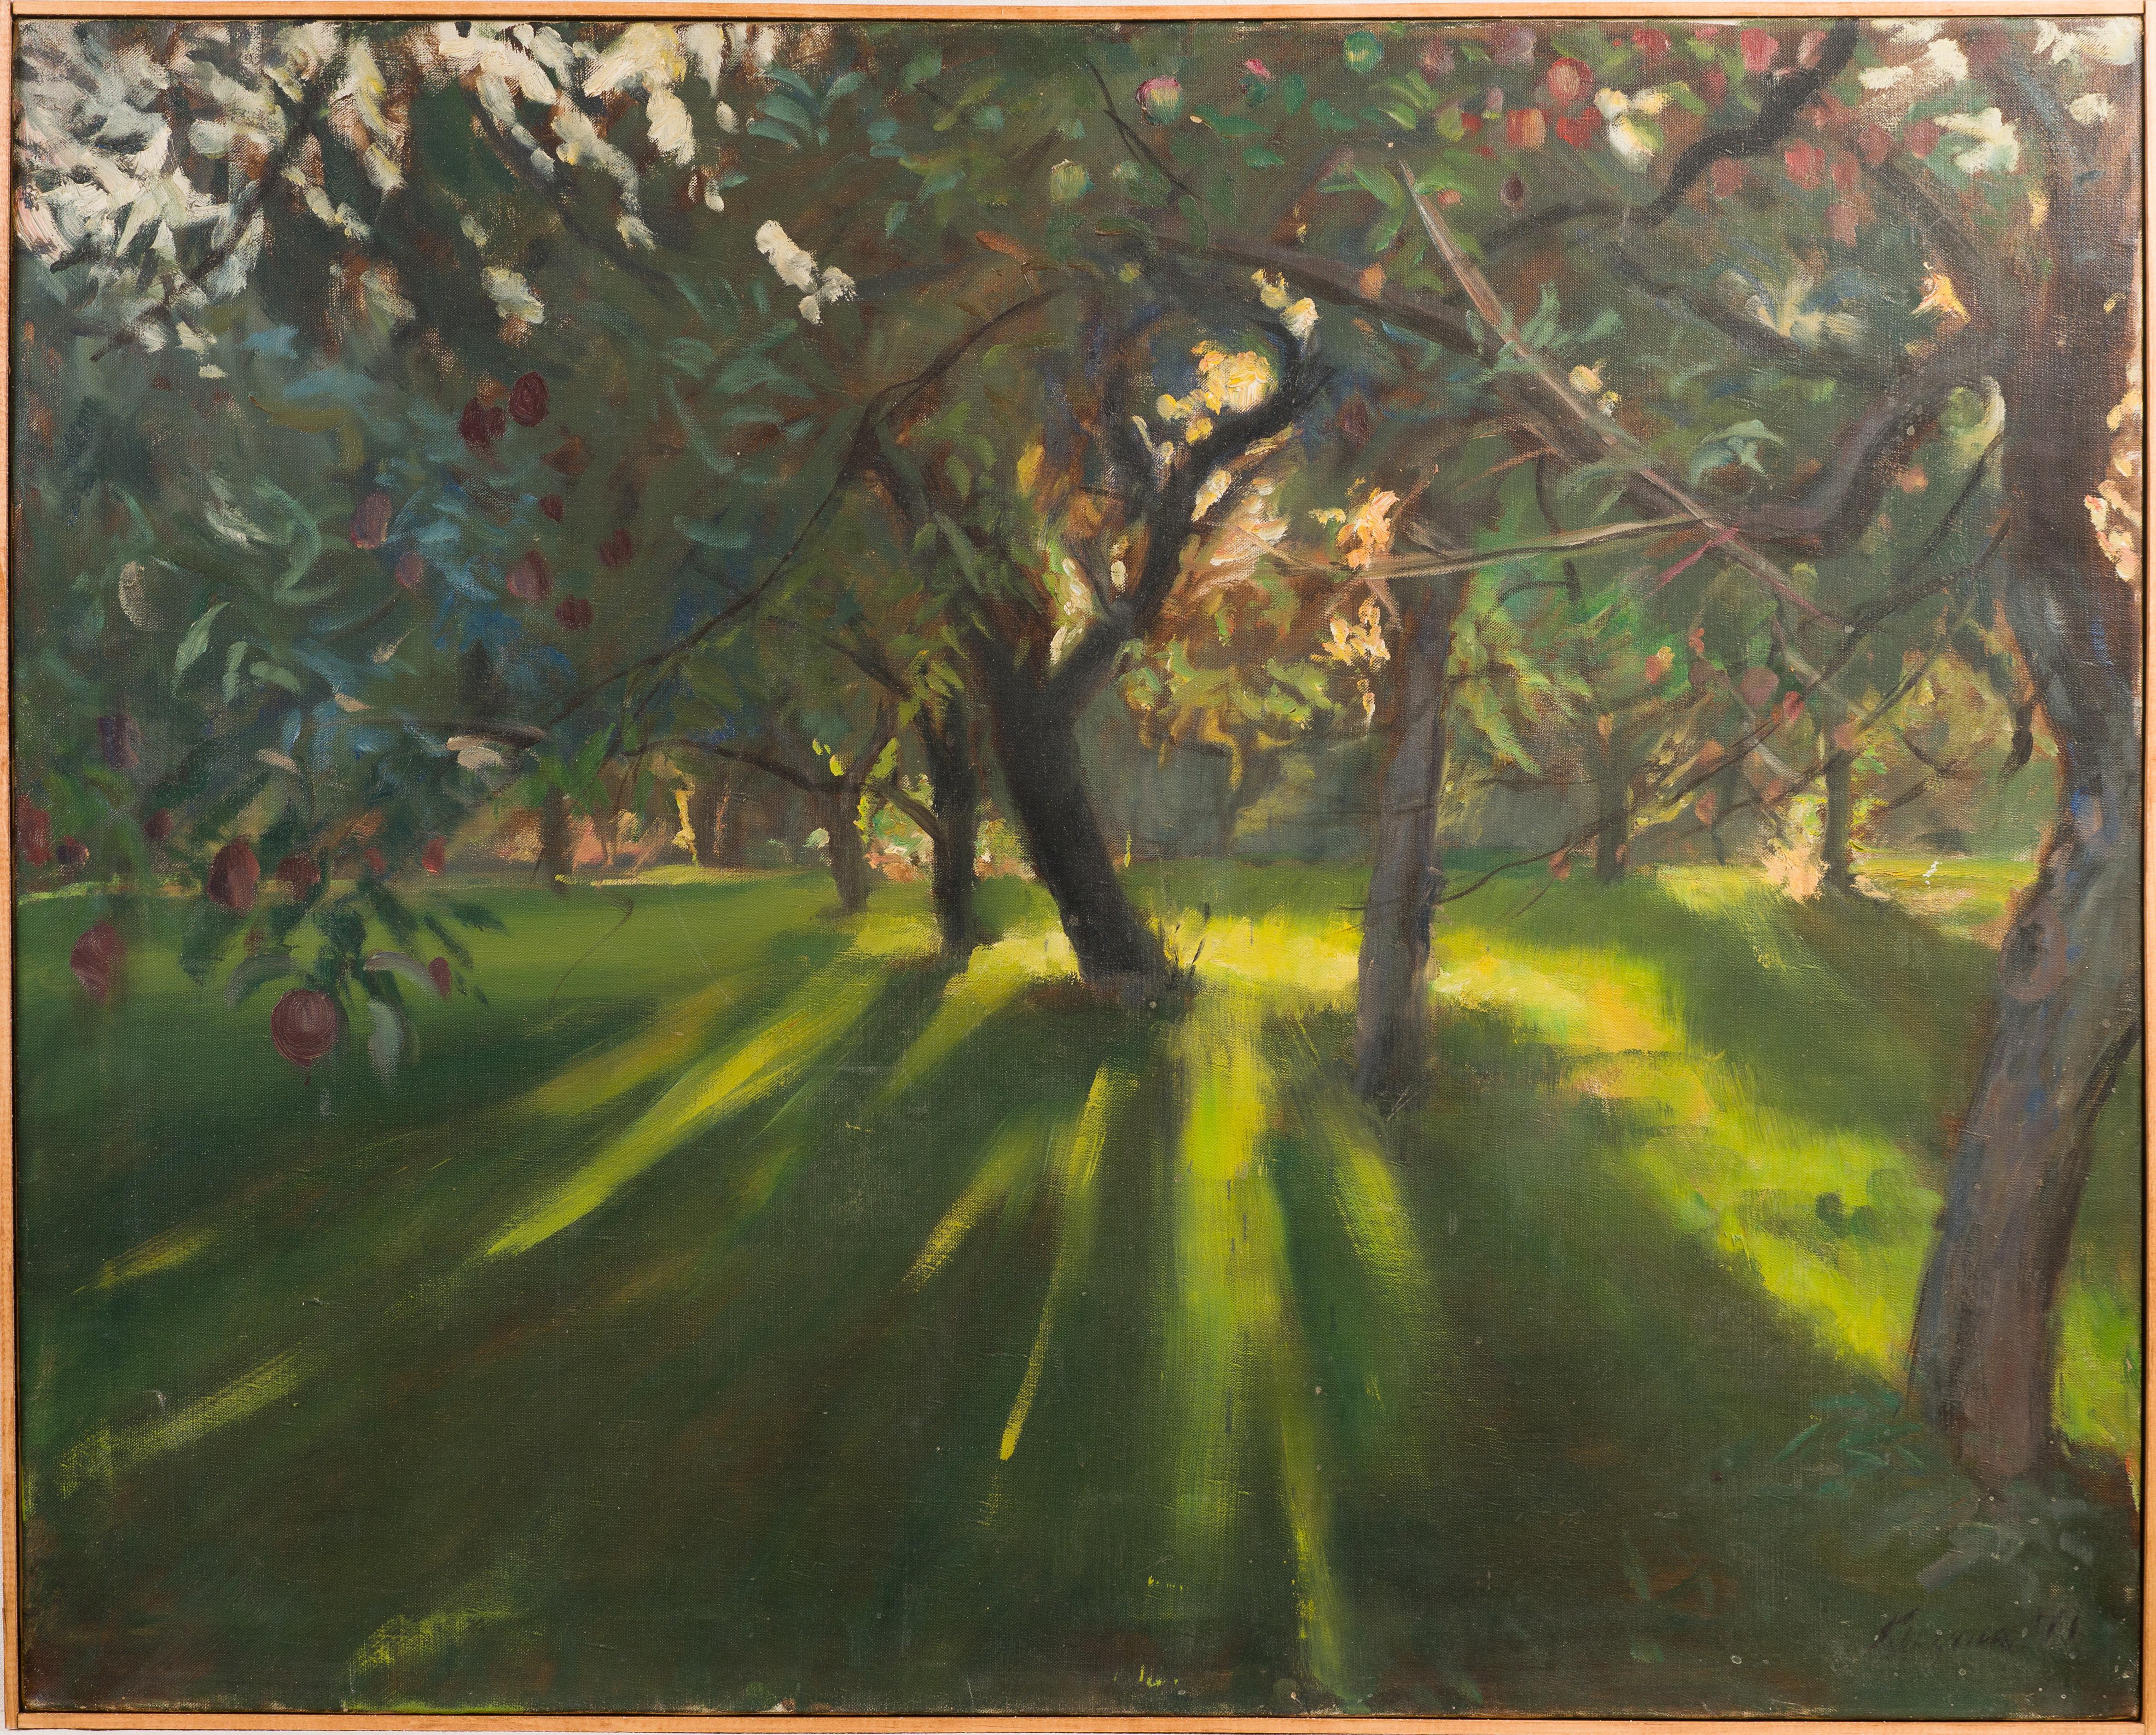 Vintage American Modernist Sunburst Apple Orchard Landscape Oil Painting Signed - Black Landscape Painting by Unknown